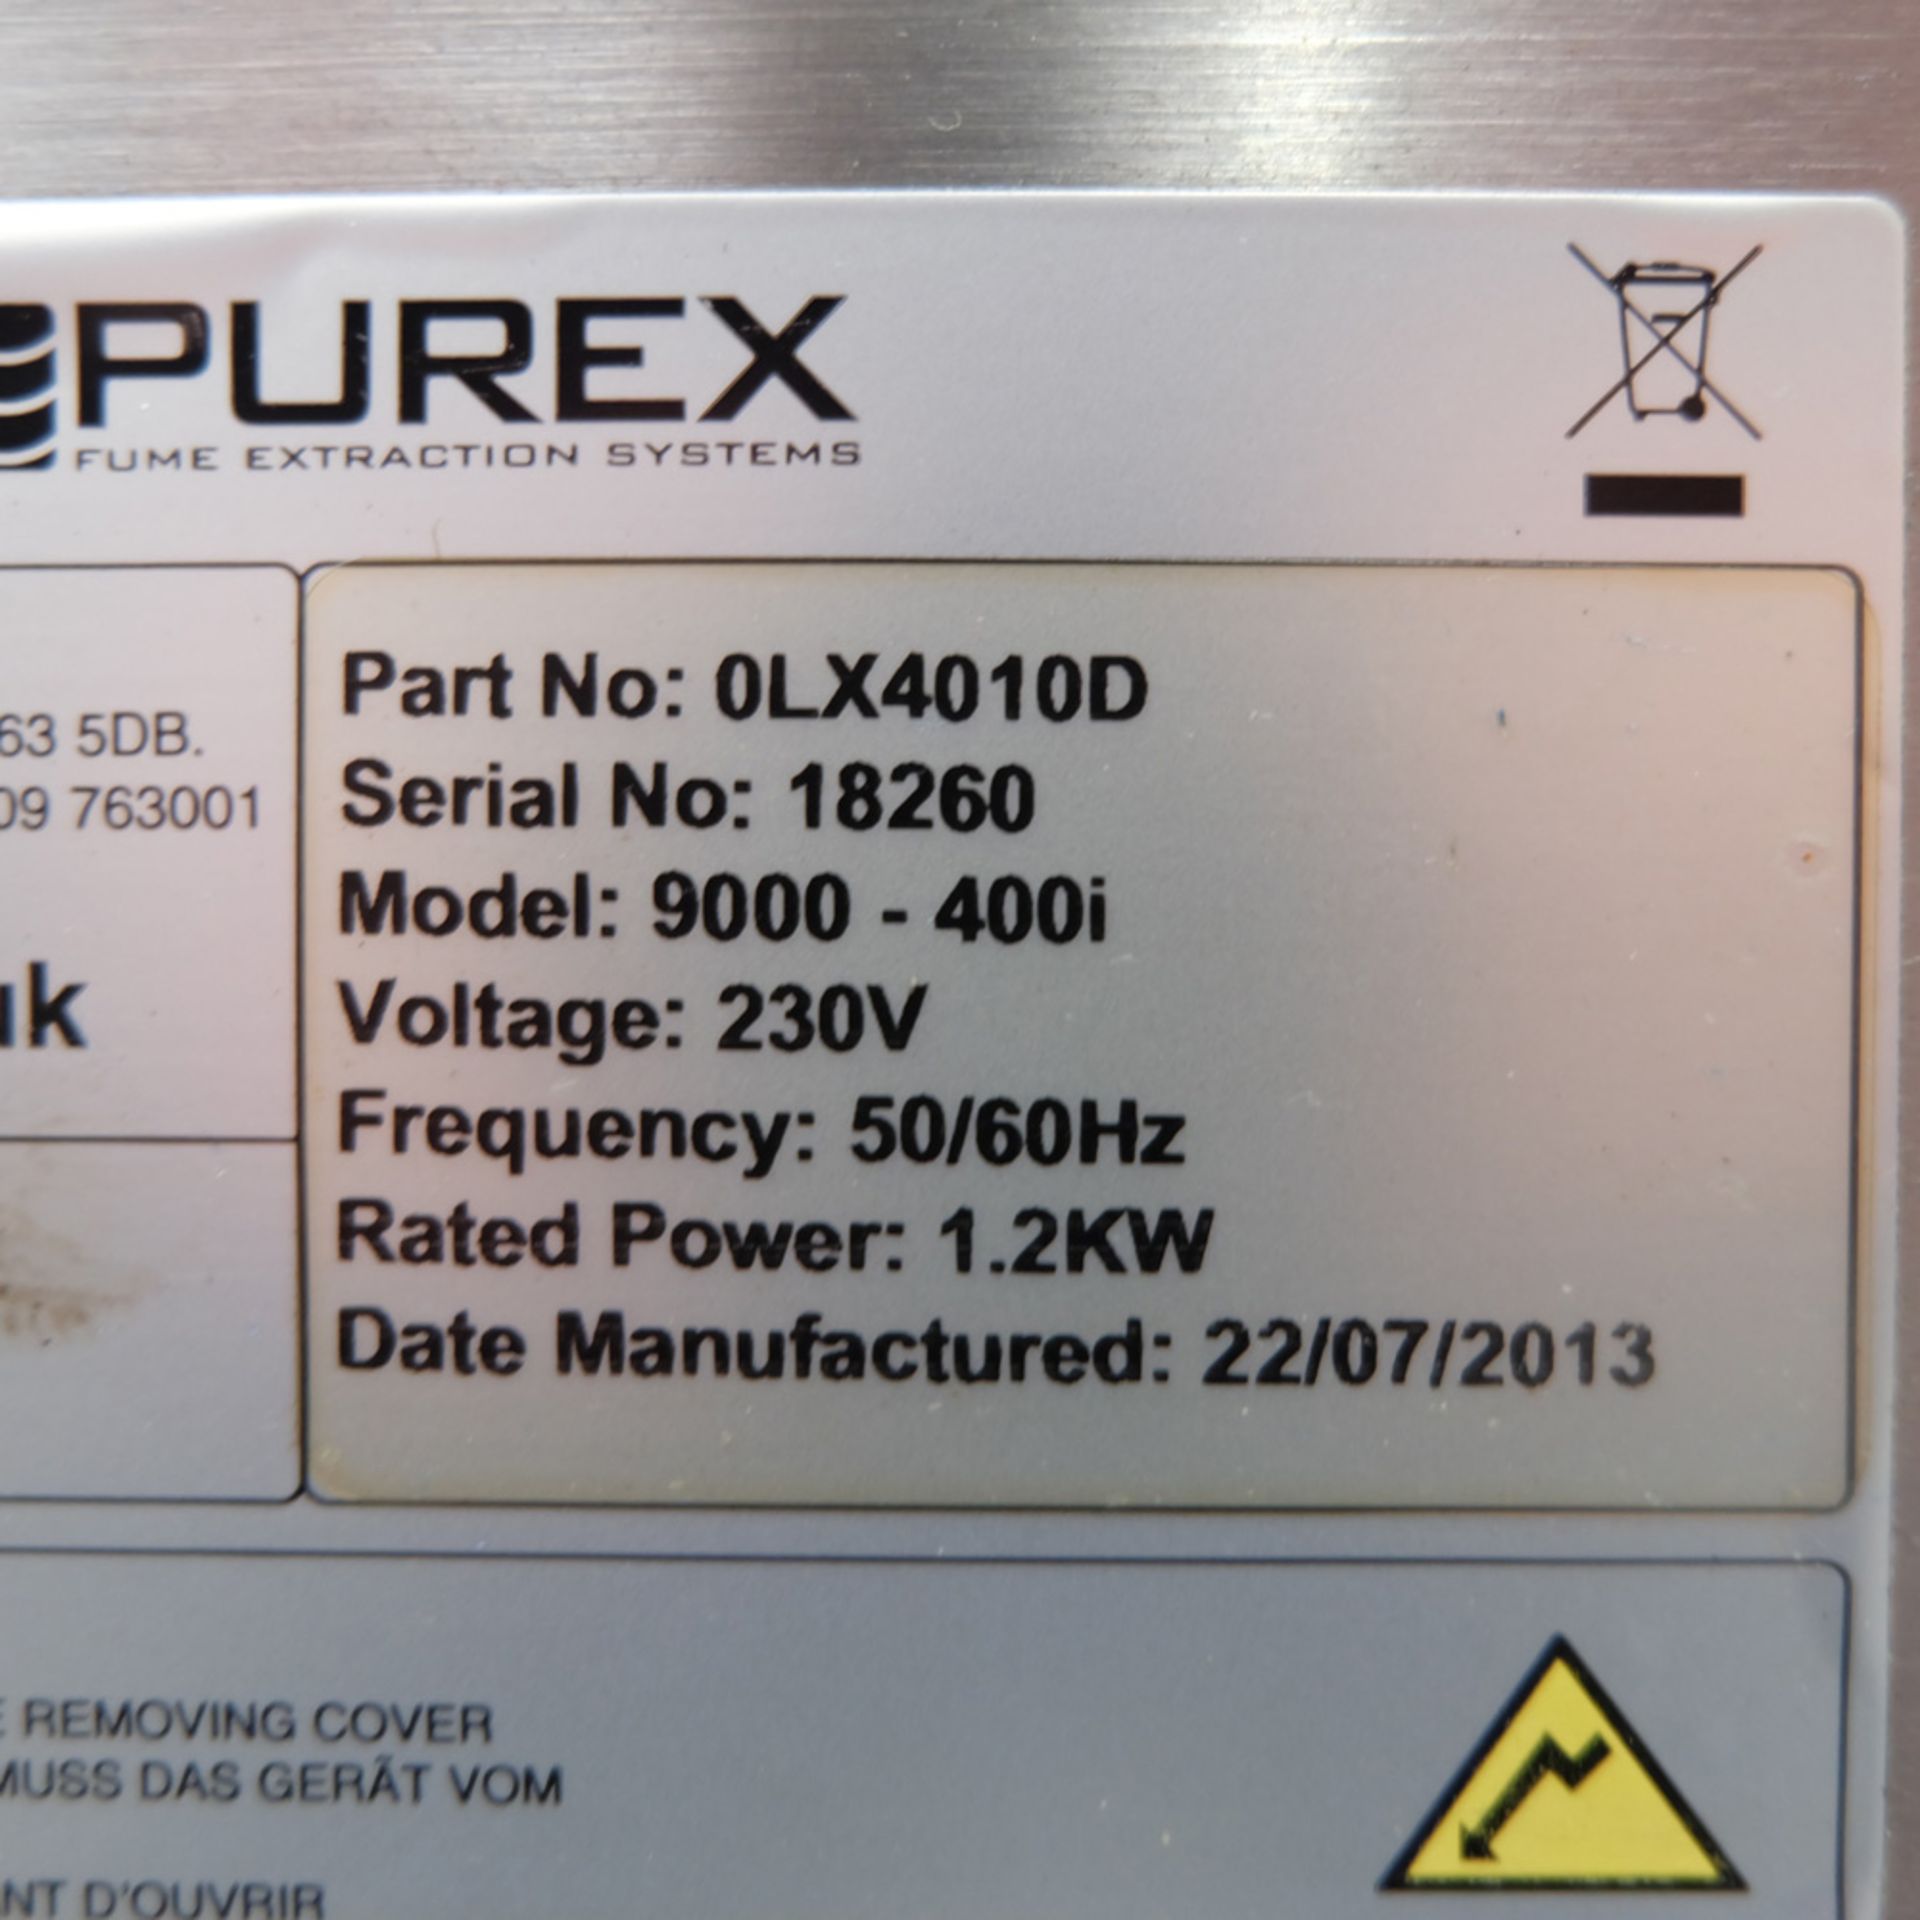 Purex Model 9000-400i Digital Fume Extractor. - Image 7 of 8